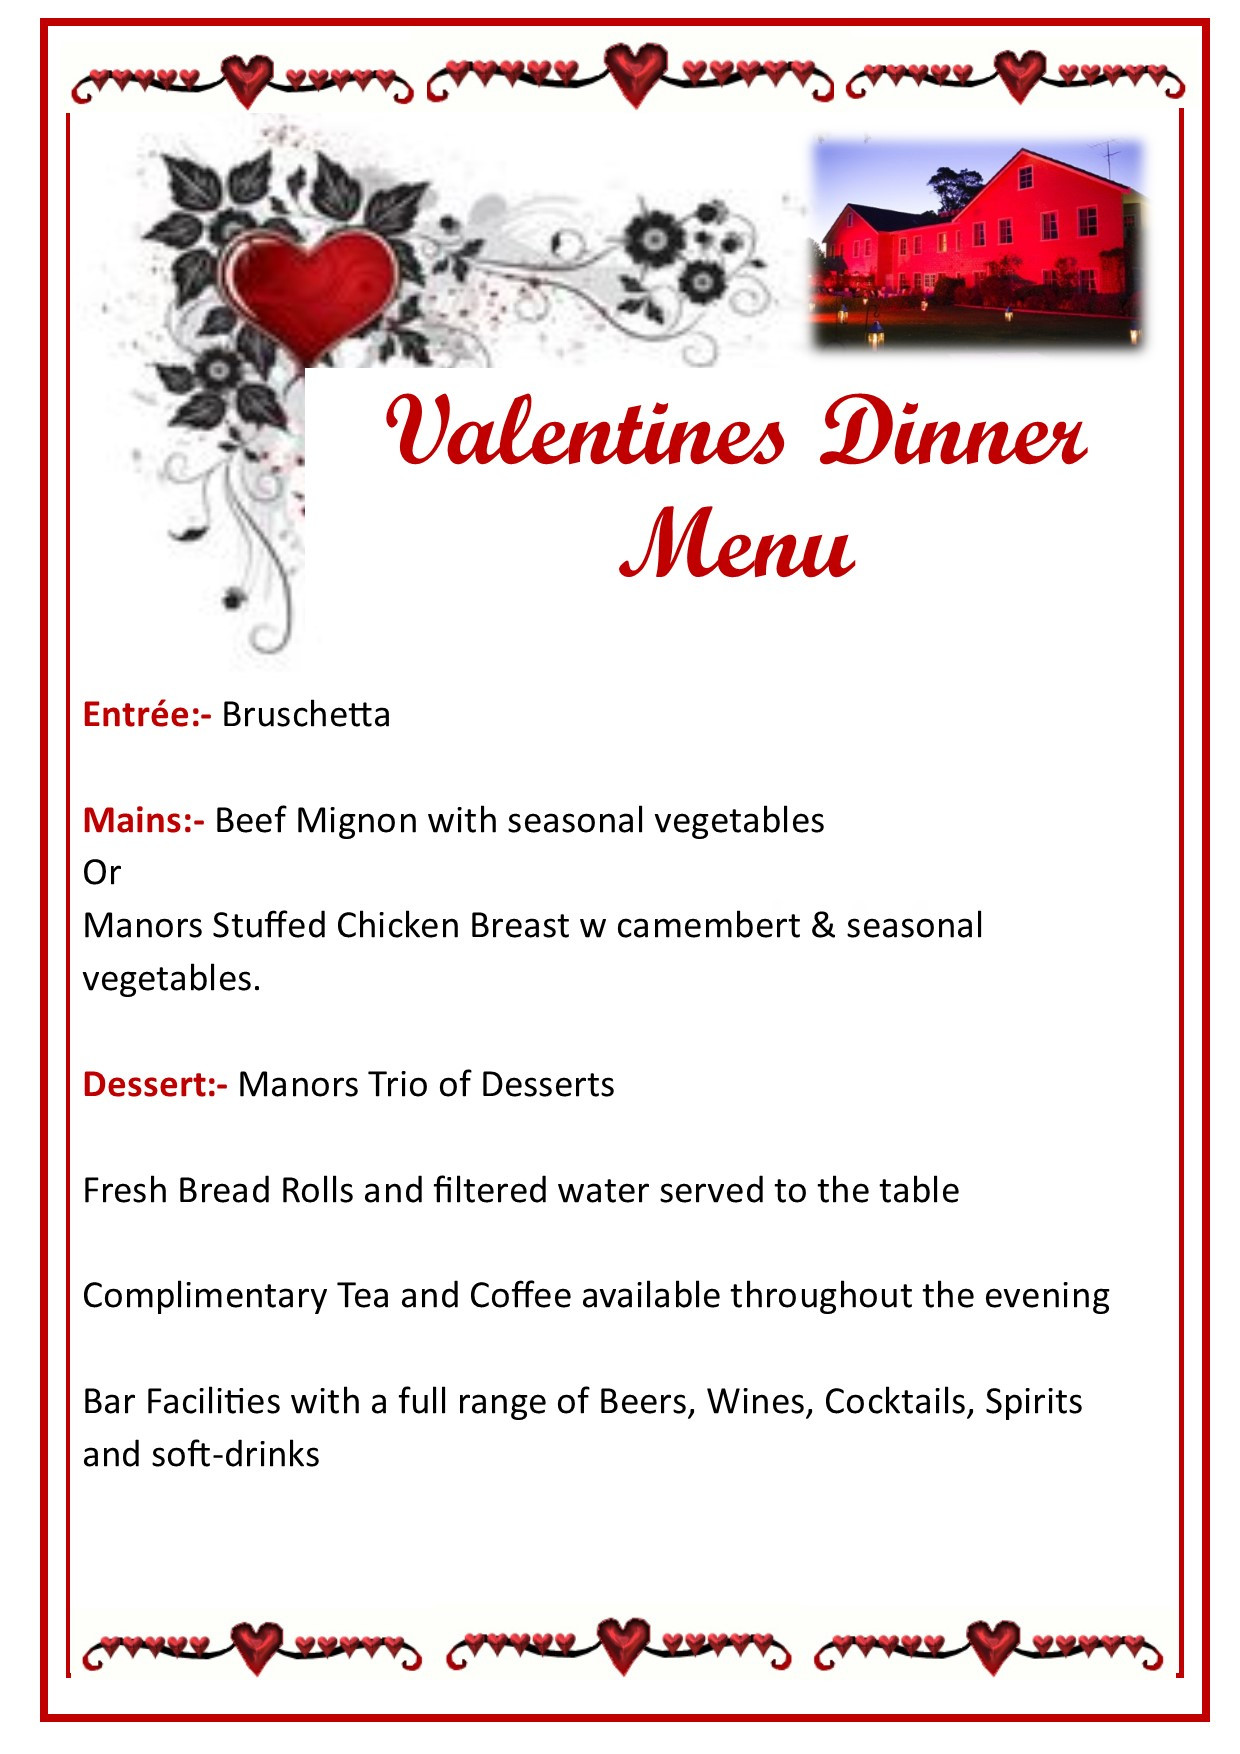 Valentine'S Day Dinner 2020
 Valentines Day Dinner – Friday 14th February 2020 – Peel